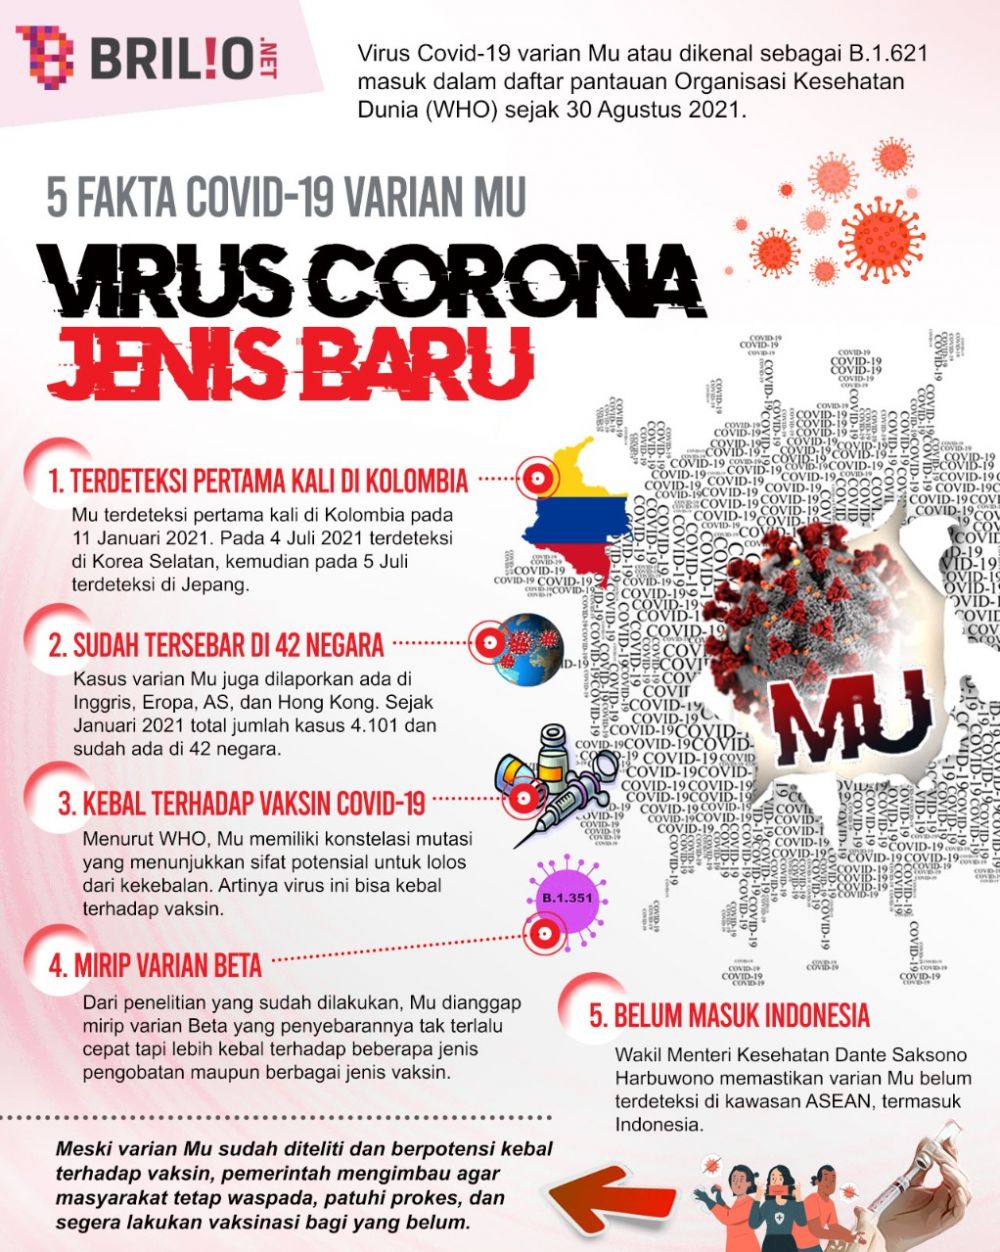 5 Fakta Varian Mu Covid-19, berpotensi kebal terhadap vaksin